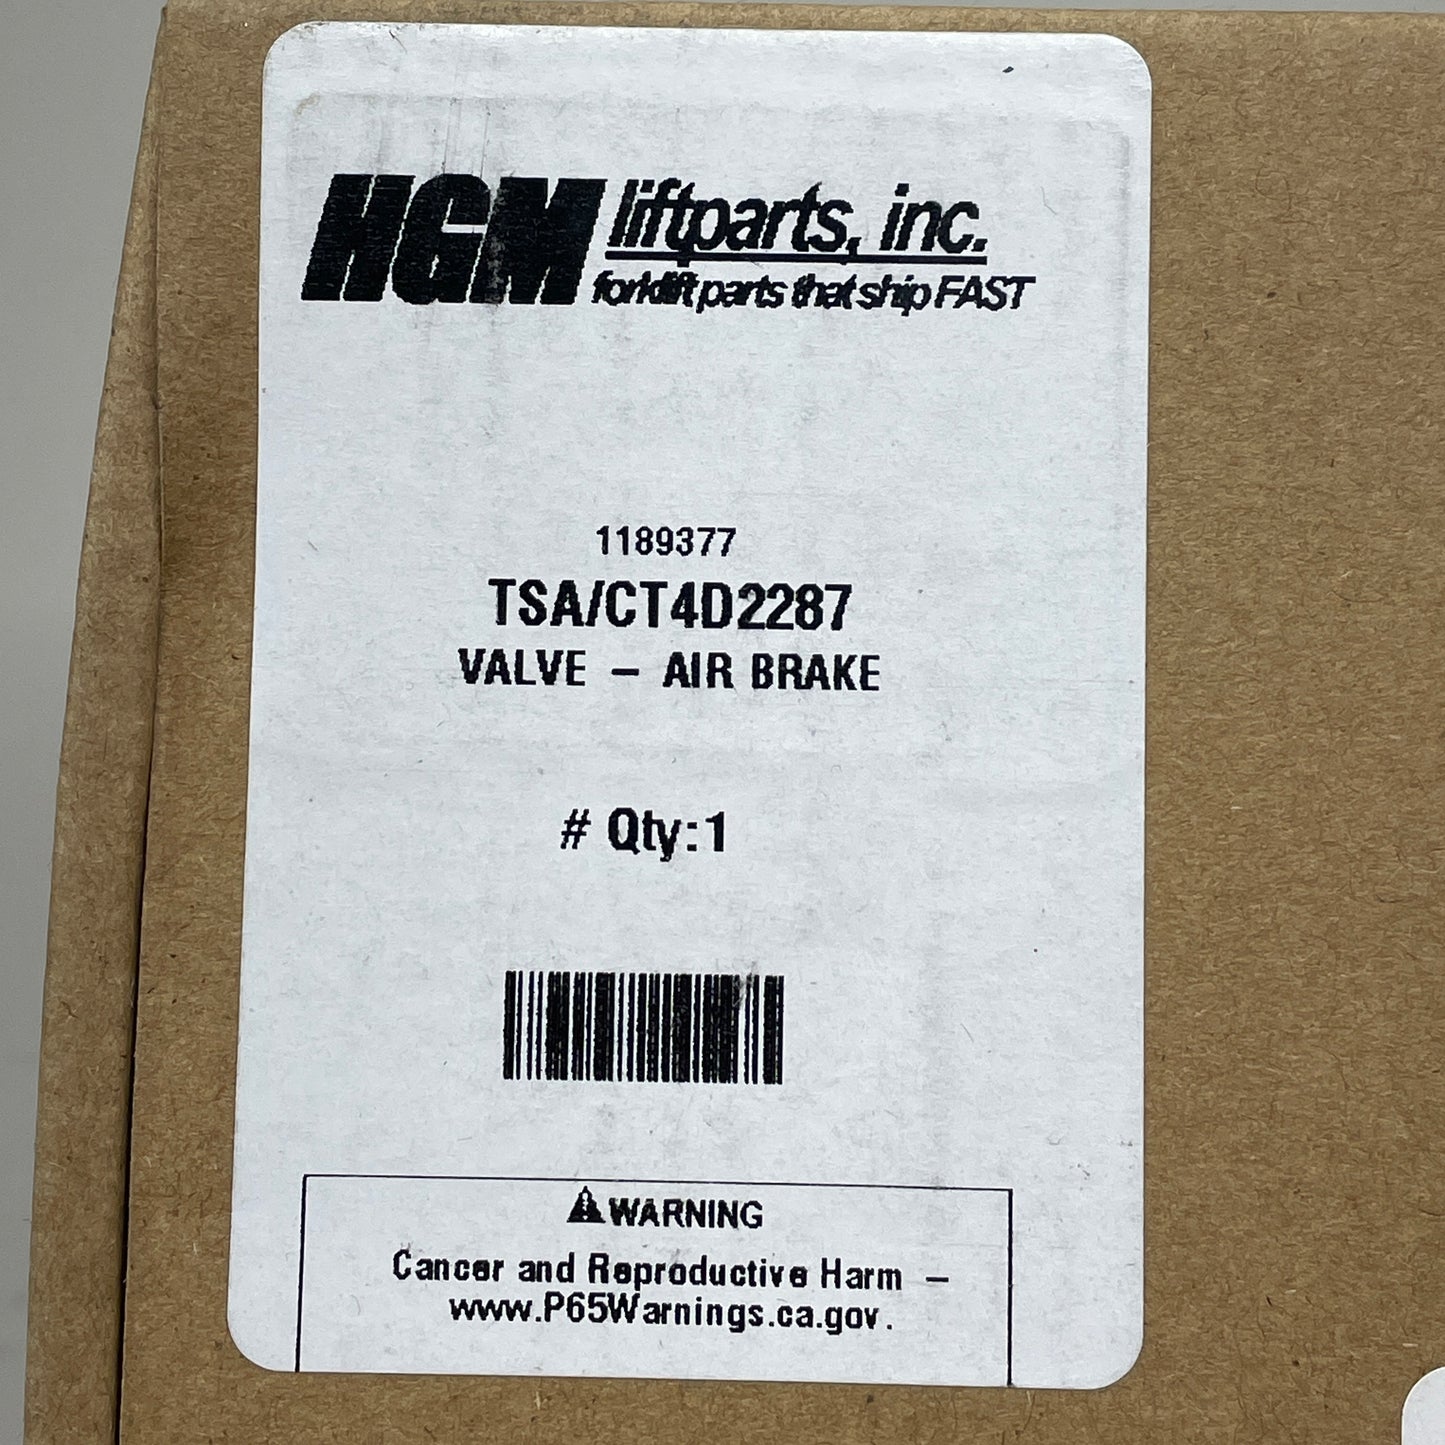 HGM LIFTPARTS, INC. CAT Caterpillar / Towmotor Valve - Air Brake Forklift Parts CT4D2287